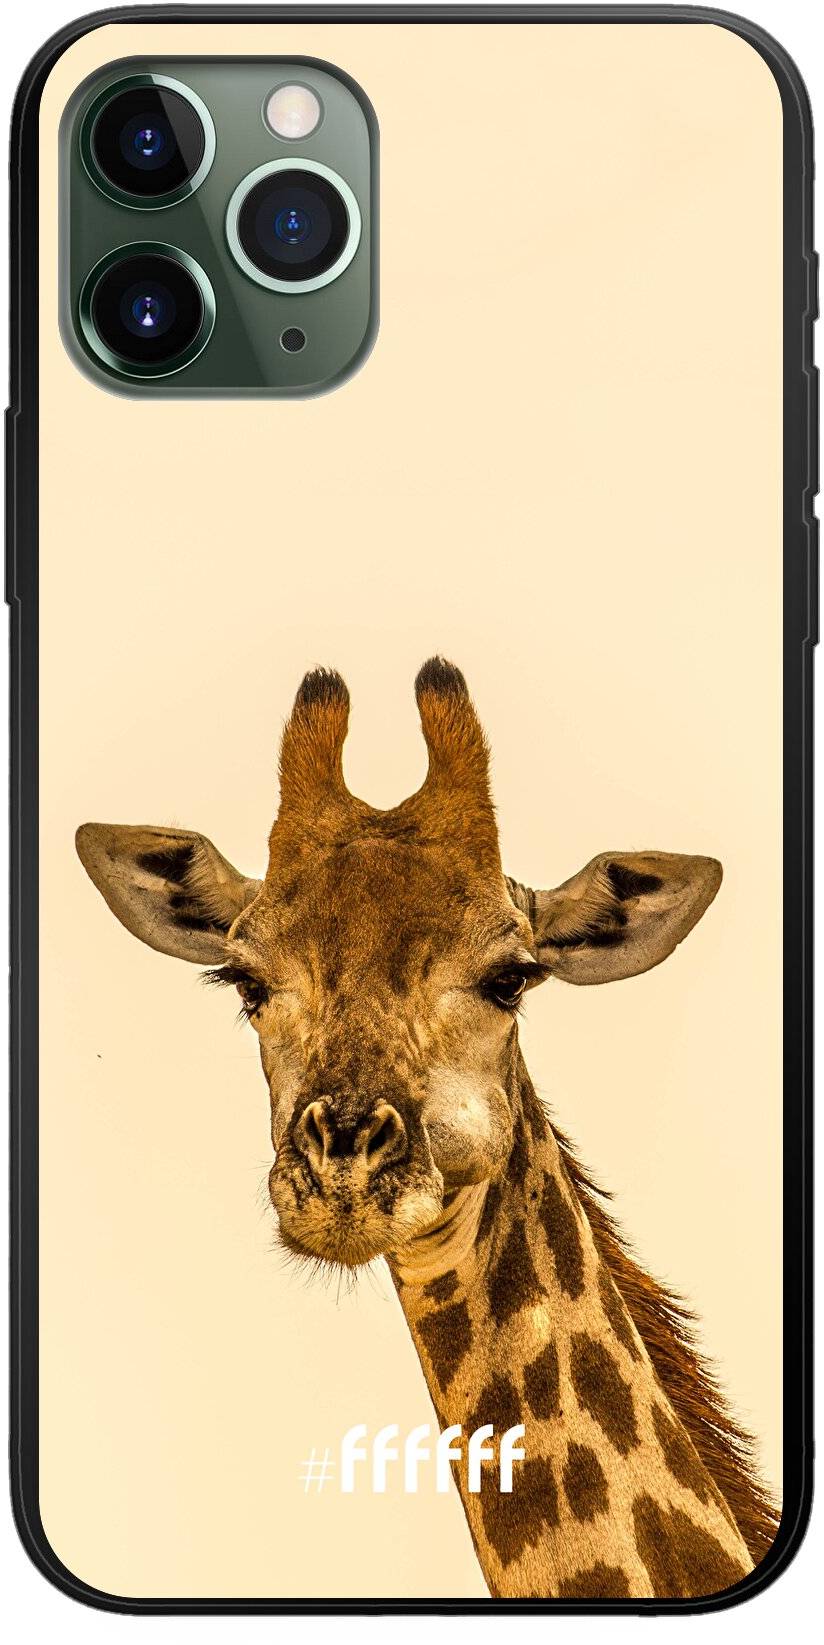 Giraffe iPhone 11 Pro